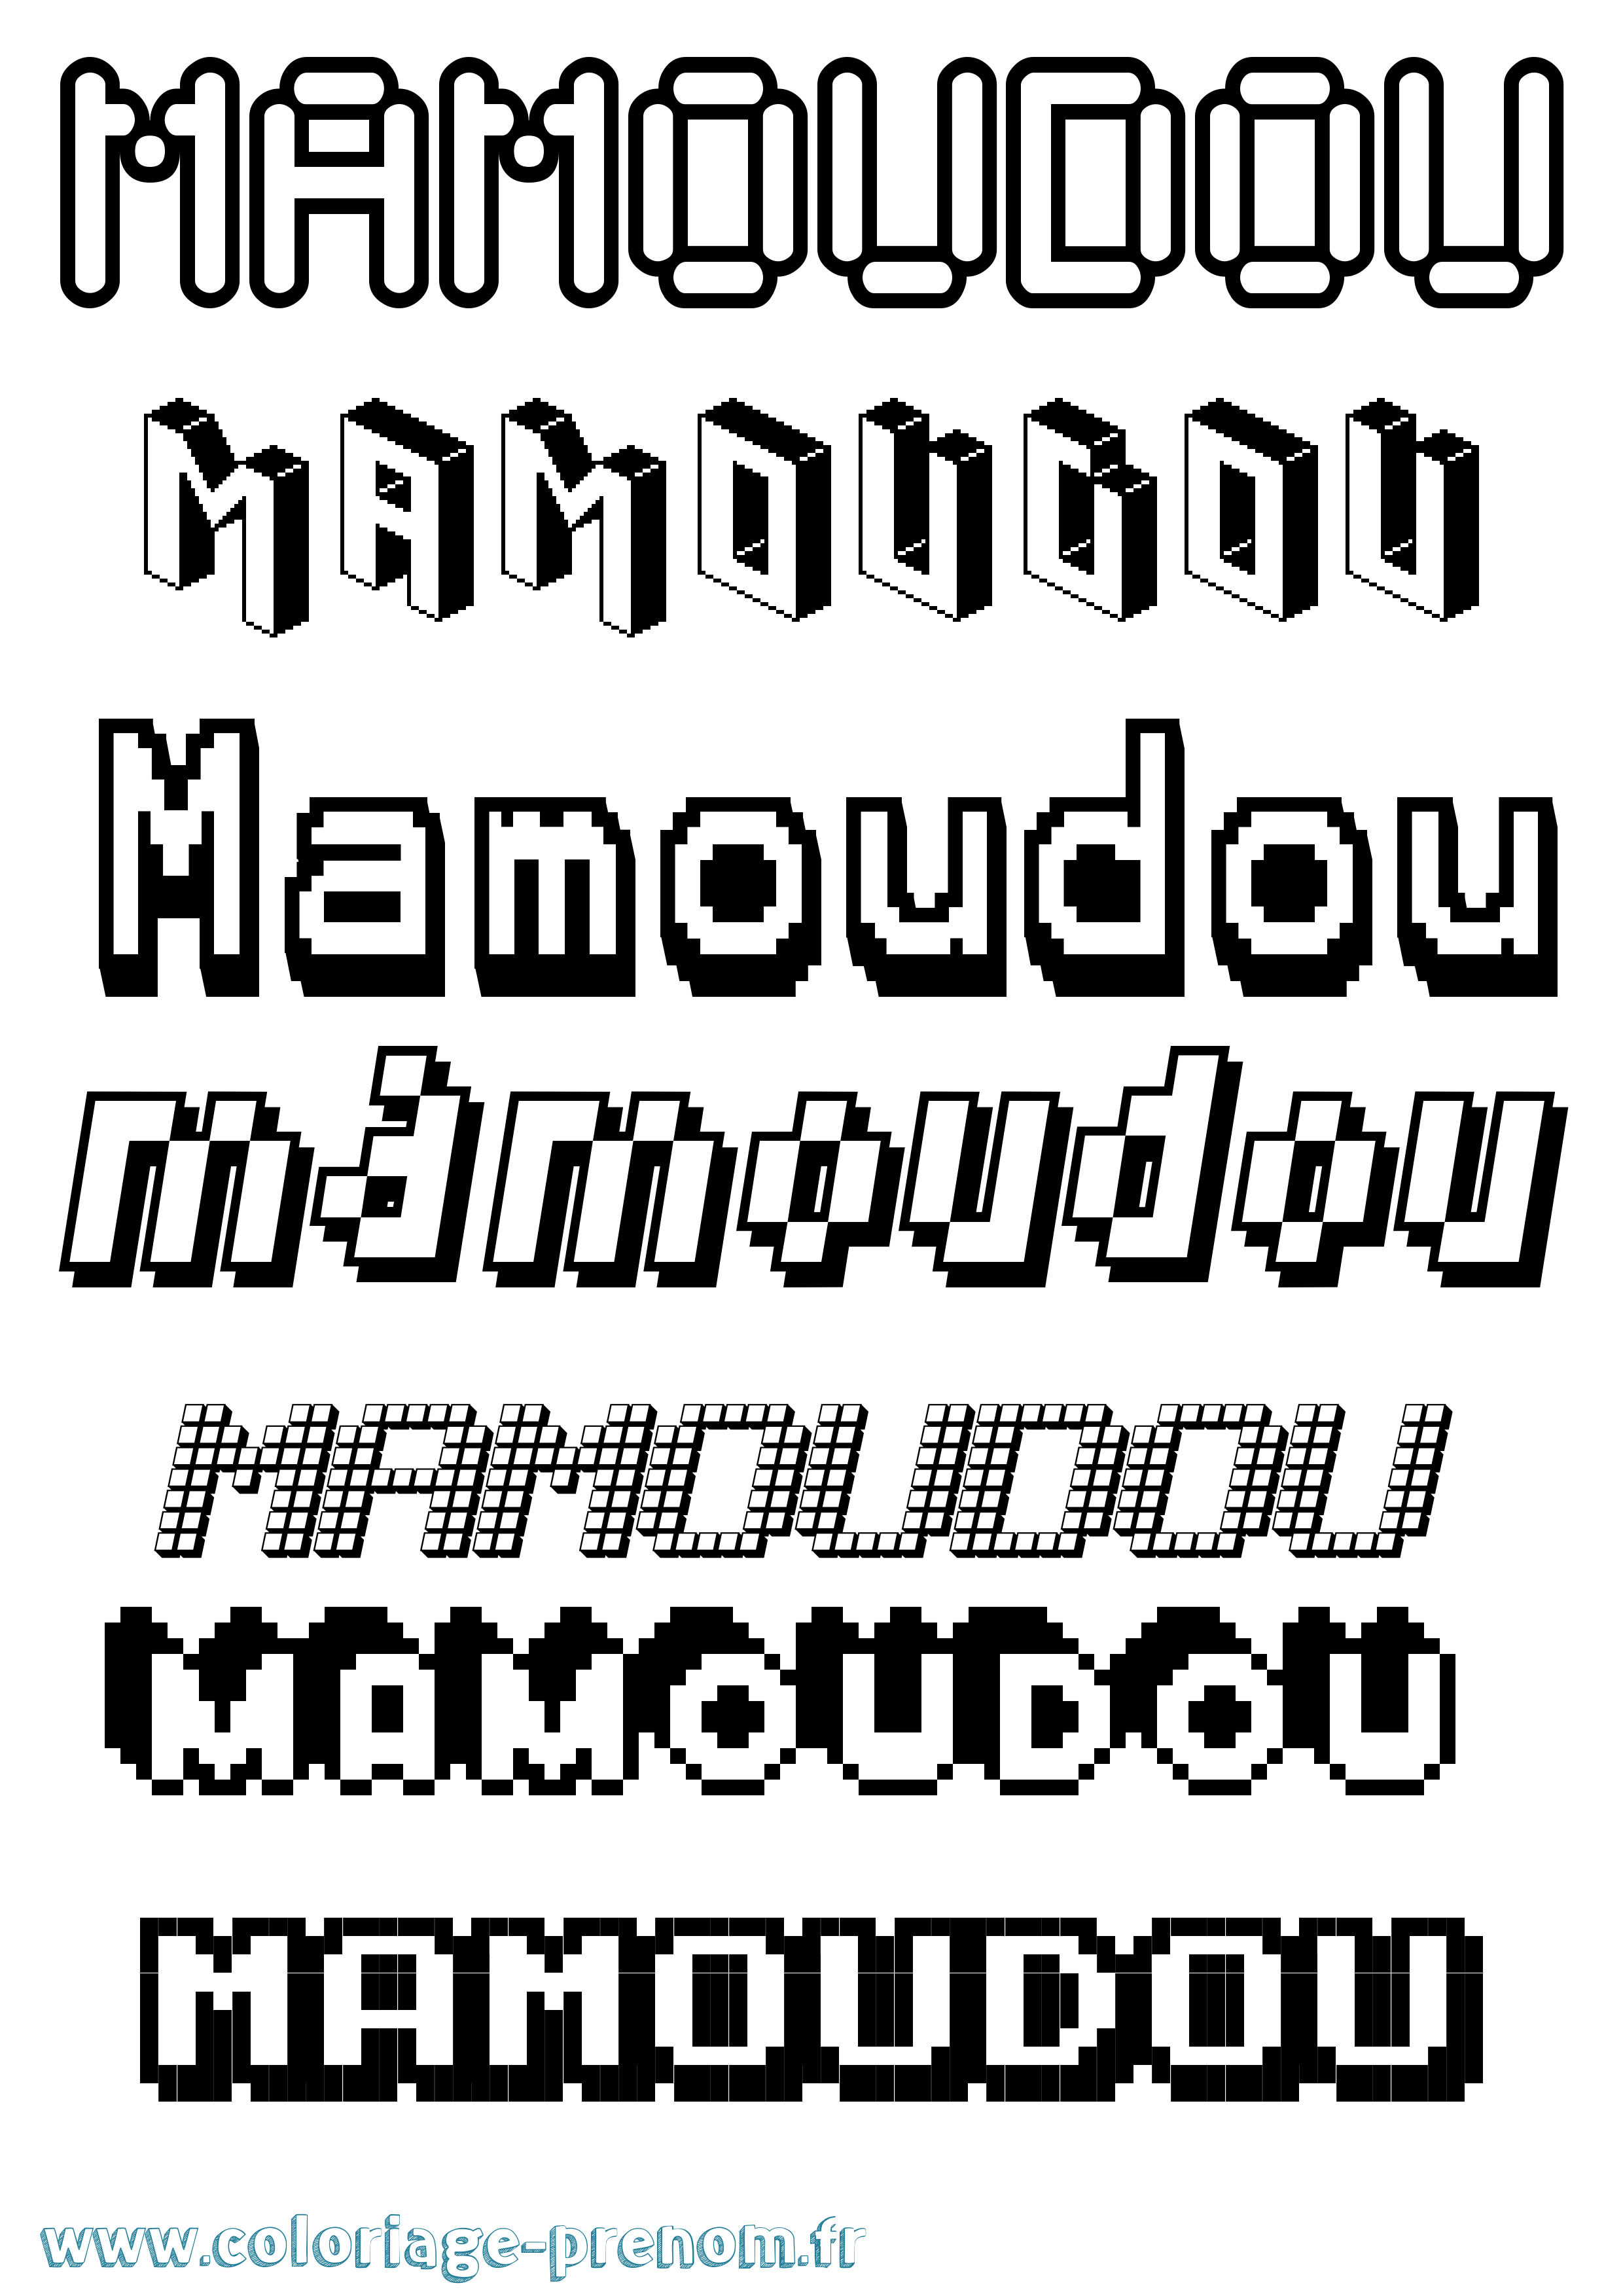 Coloriage prénom Mamoudou